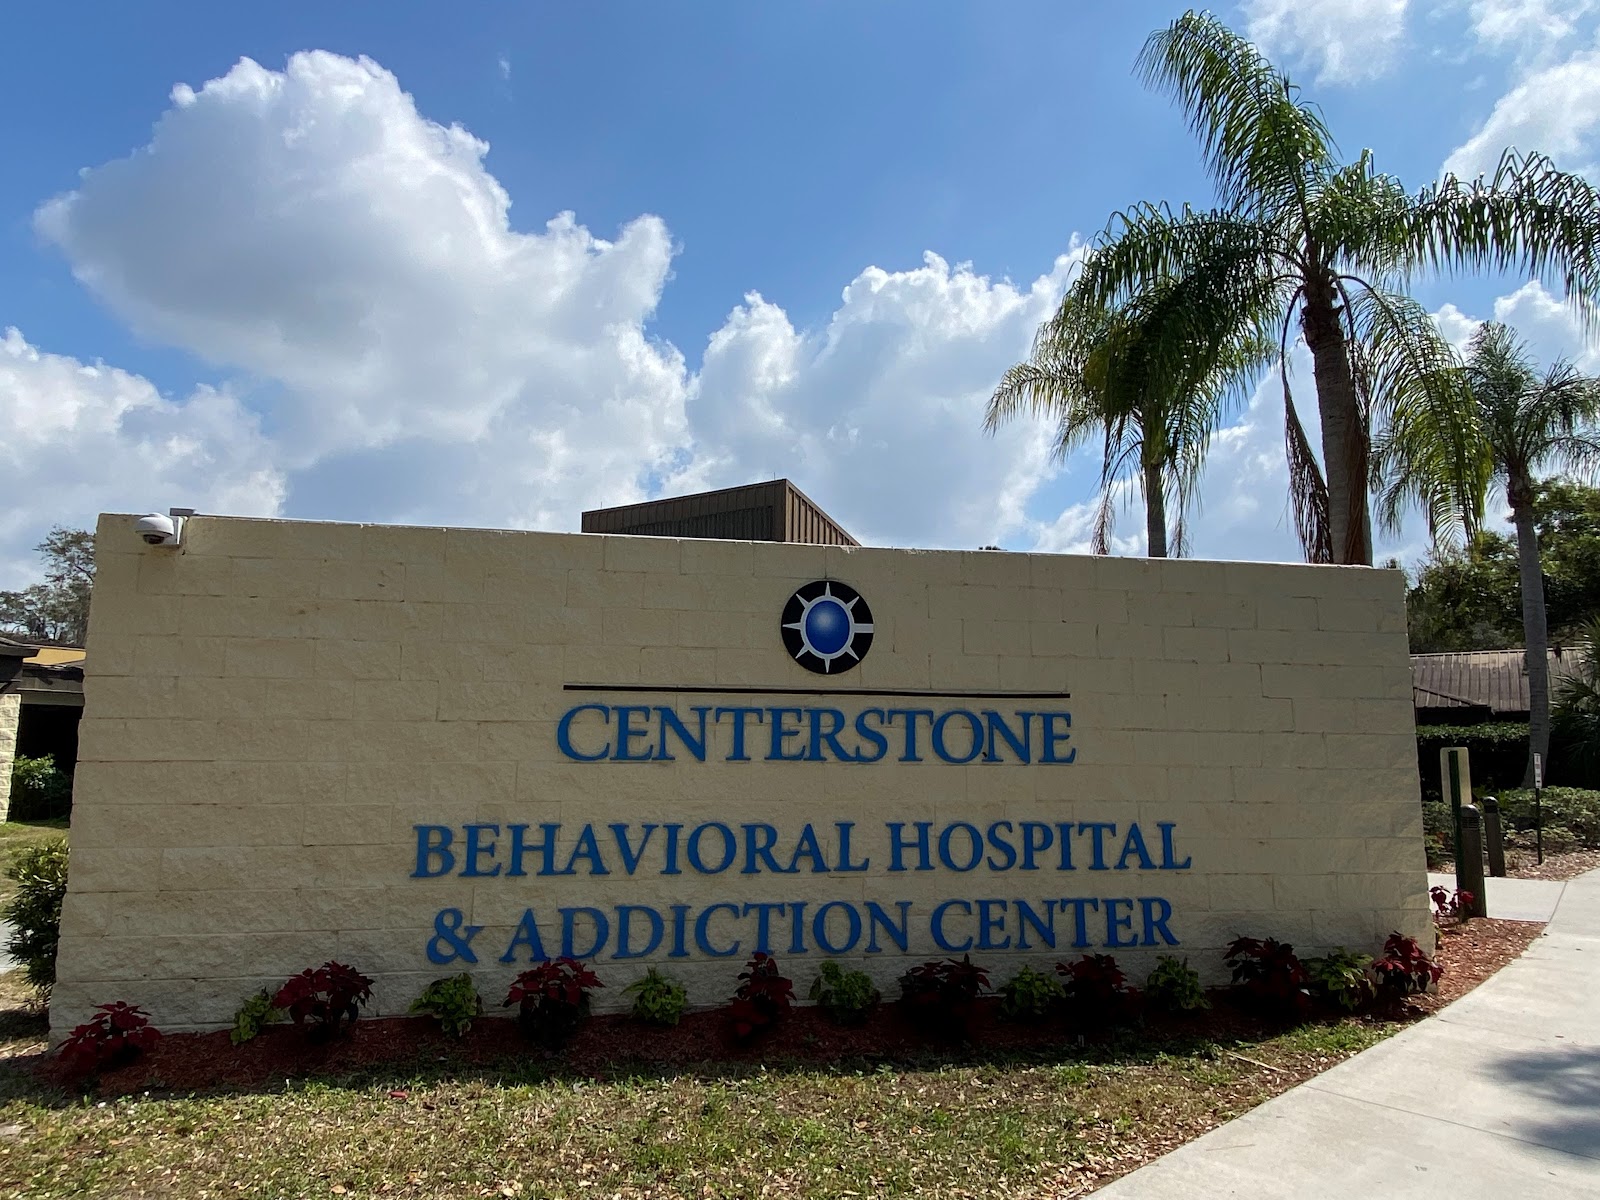 Centerstone Behavioral Hospital and Addiction Center